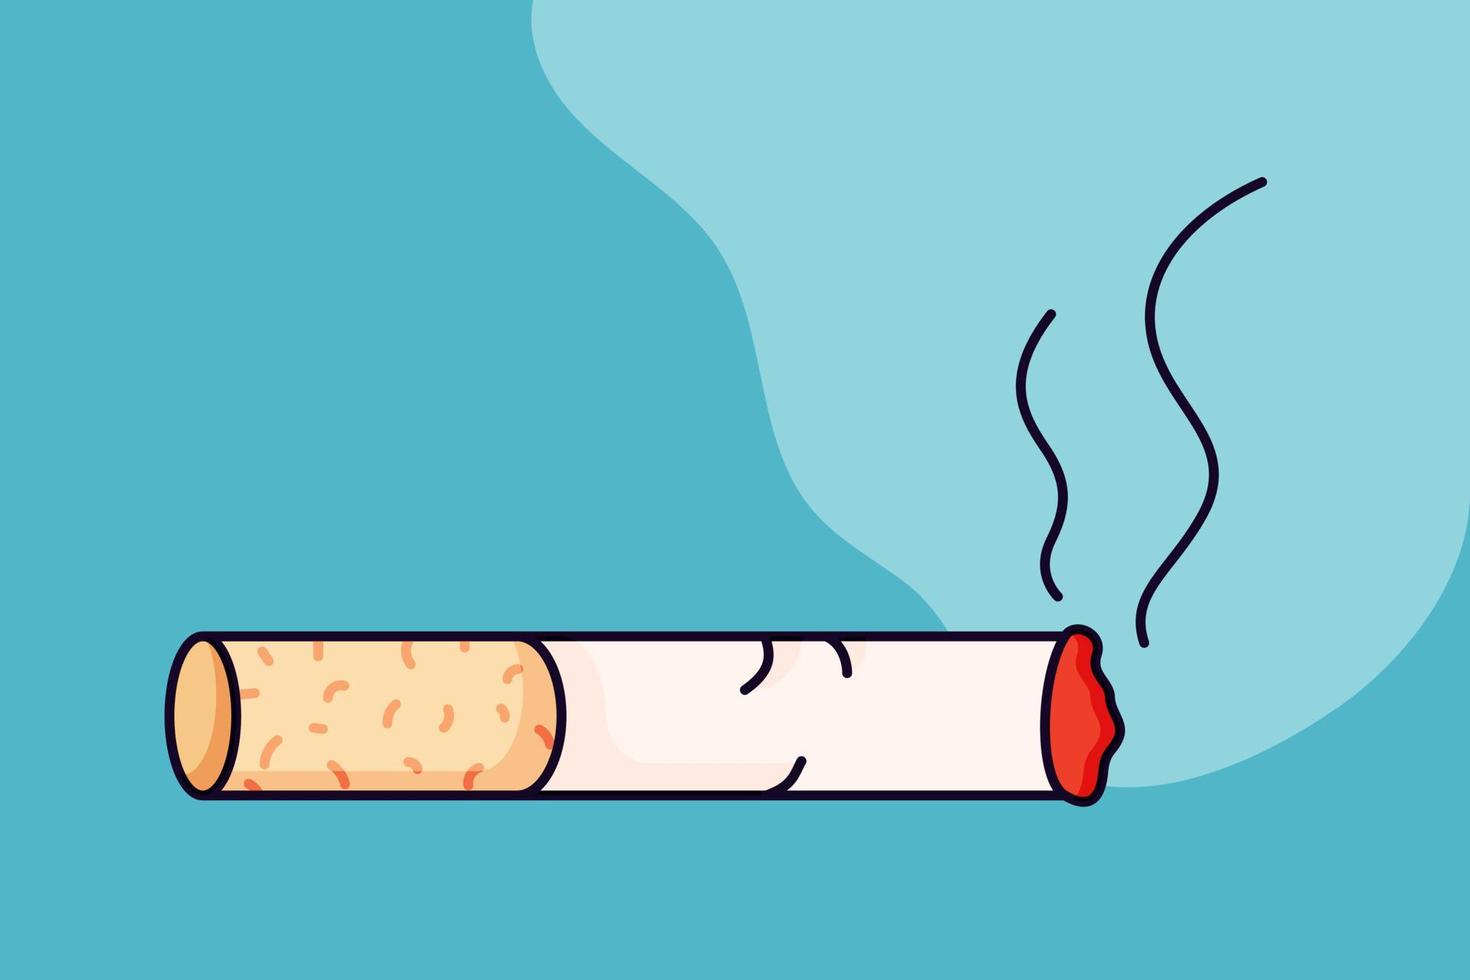 horisontell affisch med en rökande cigarett i tecknad trendstil på 70-talet. vektor